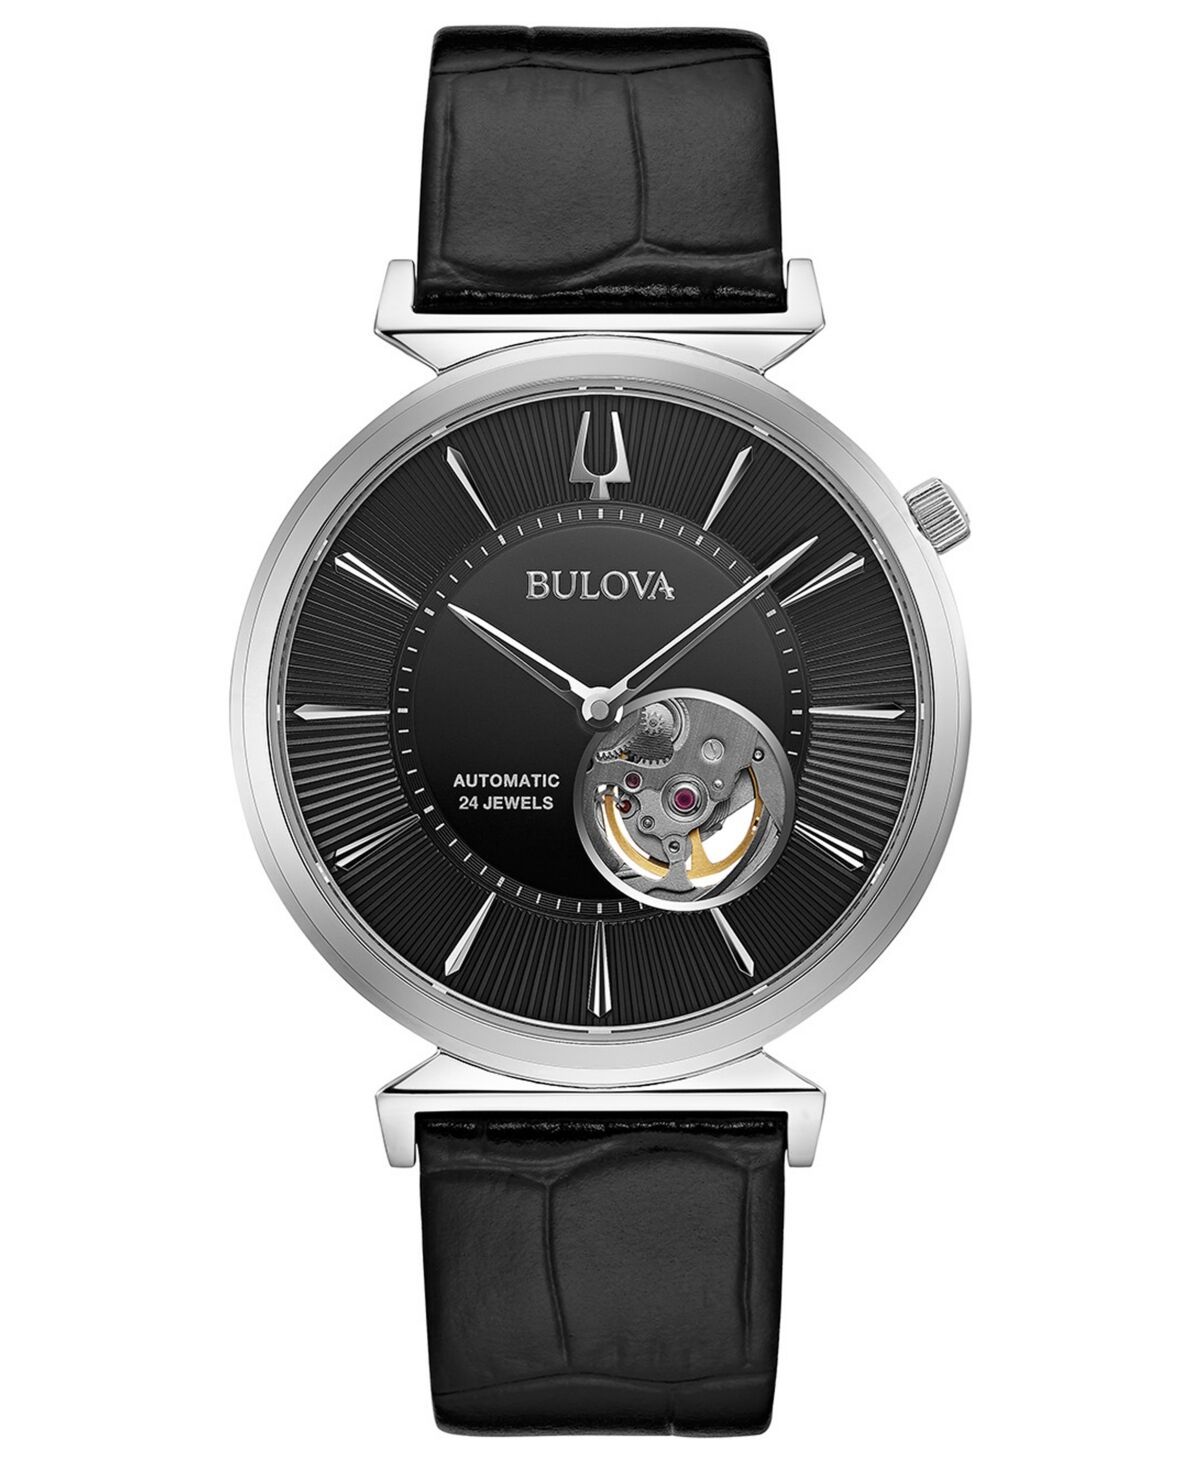 Bulova Men's Automatic Regatta Black Leather Strap Watch 40mm - Black